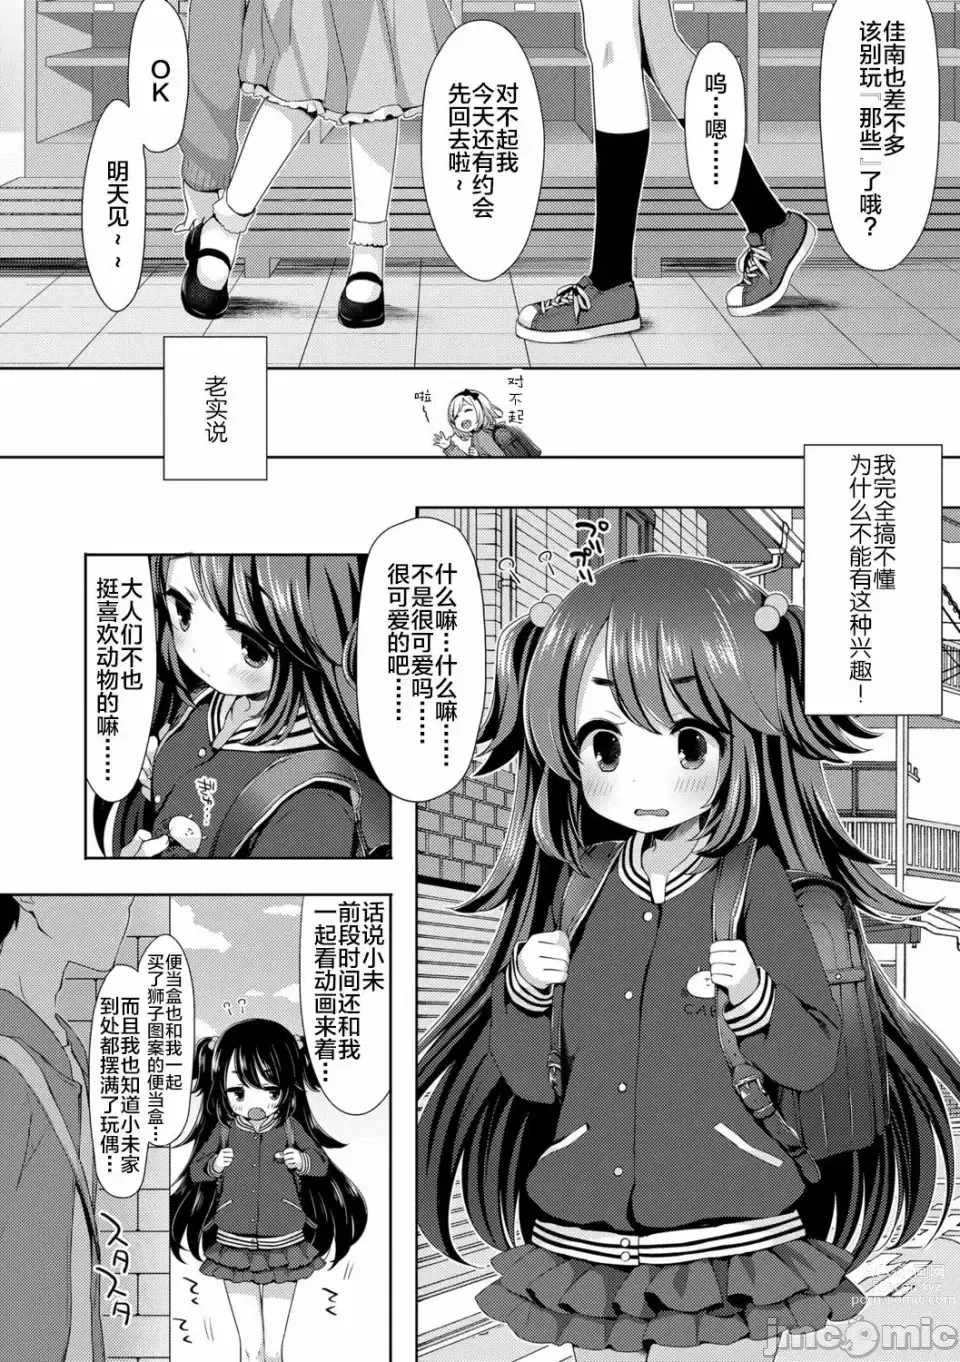 Page 5 of manga 喵喵驚喜!